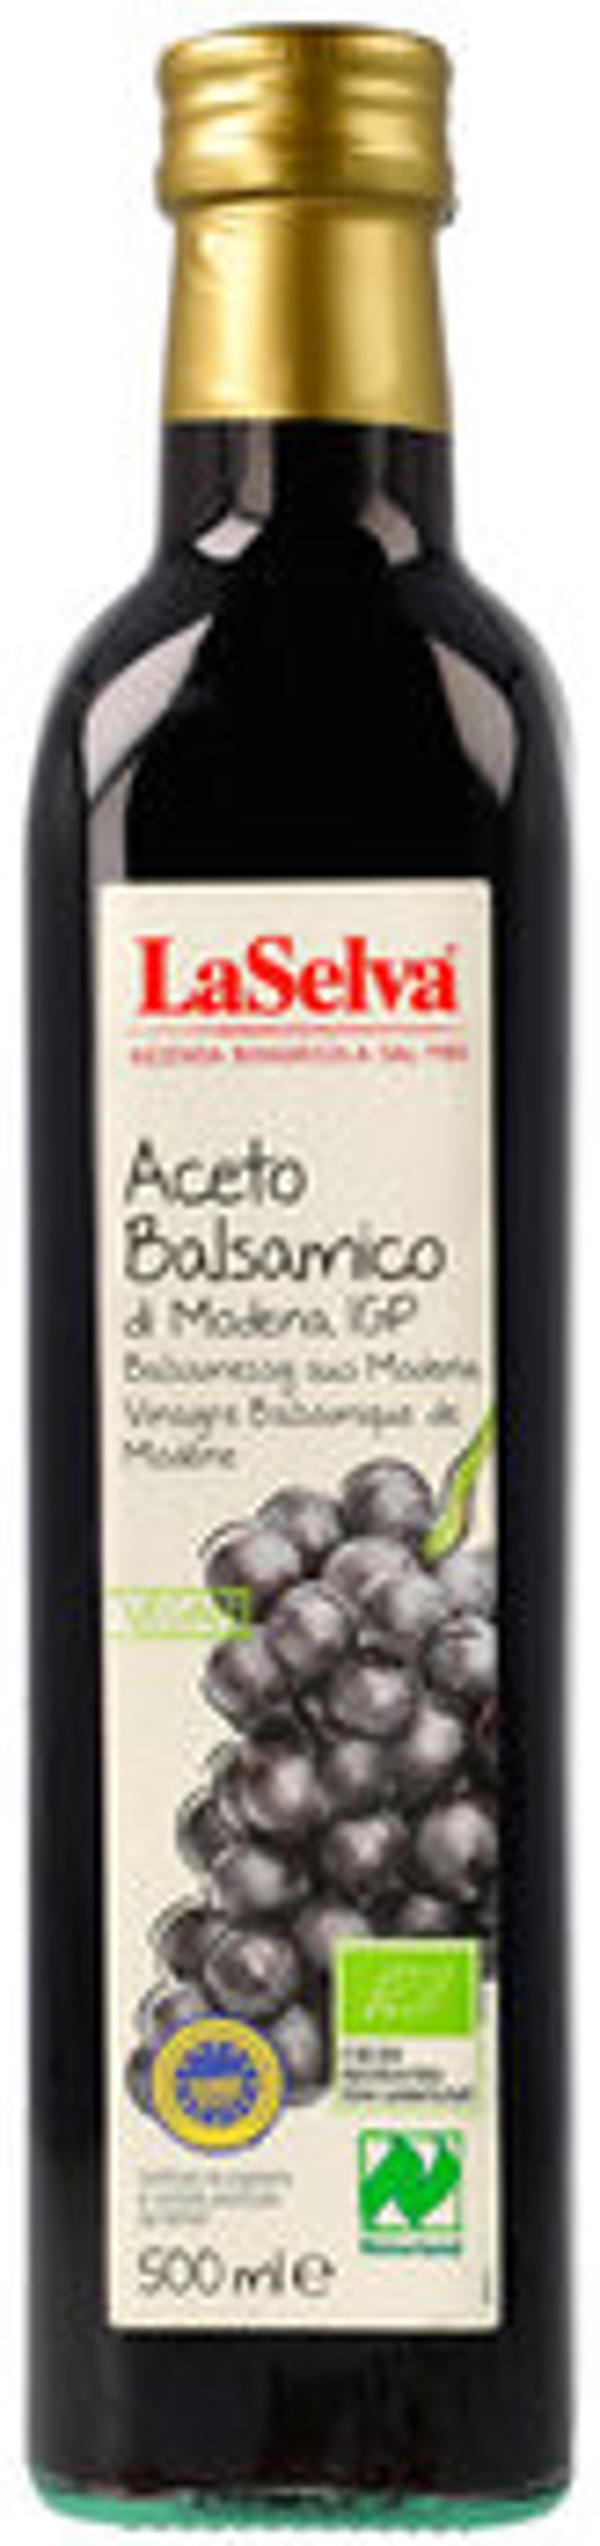 Produktfoto zu Balsamico di Modena Essig